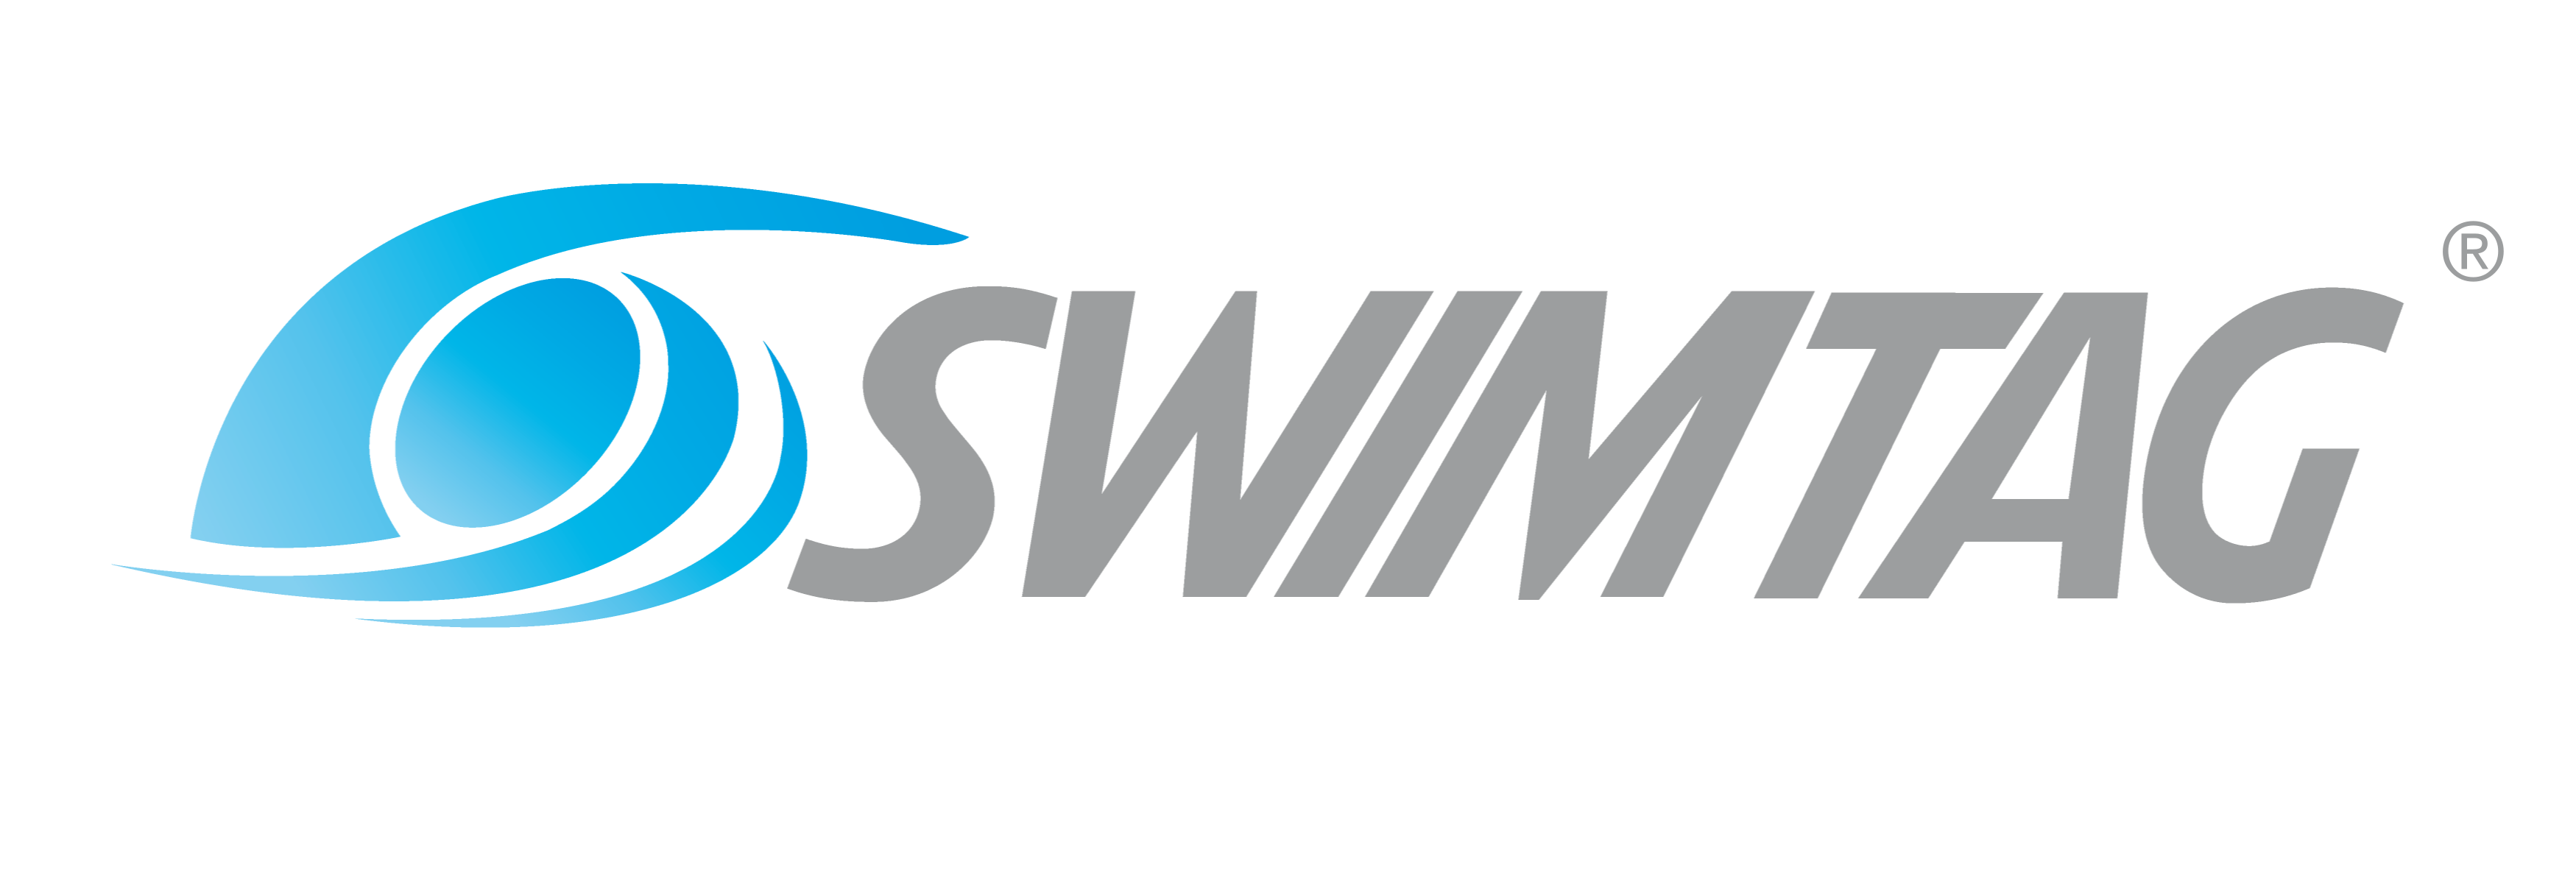 SWIMTAG Logo